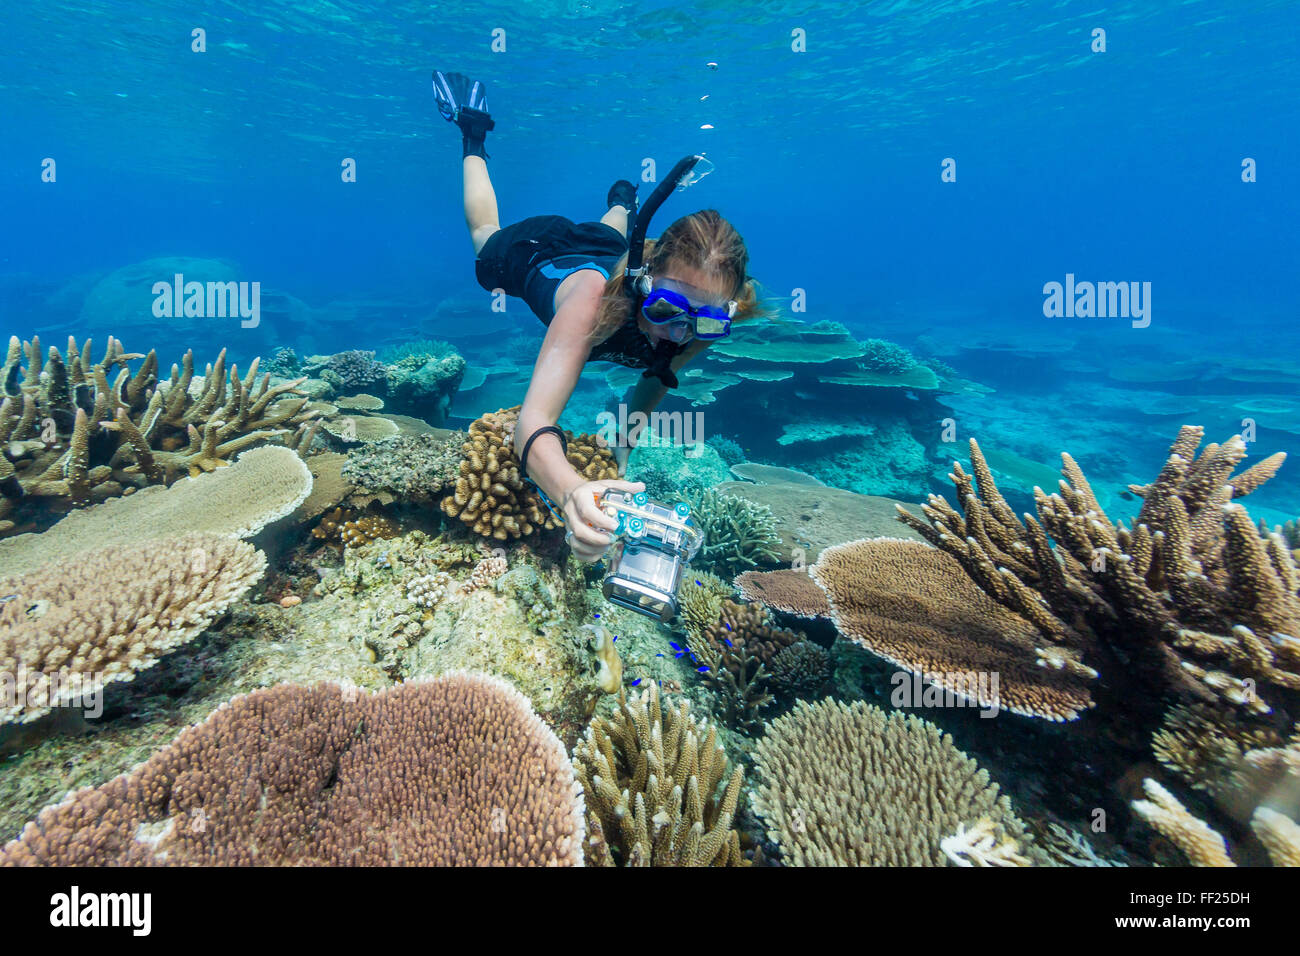 Snorkeler in underwater profusion of hard plate corals at Pulau Setaih Island, Natuna Archipelago, Indonesia, Southeast Asia Stock Photo